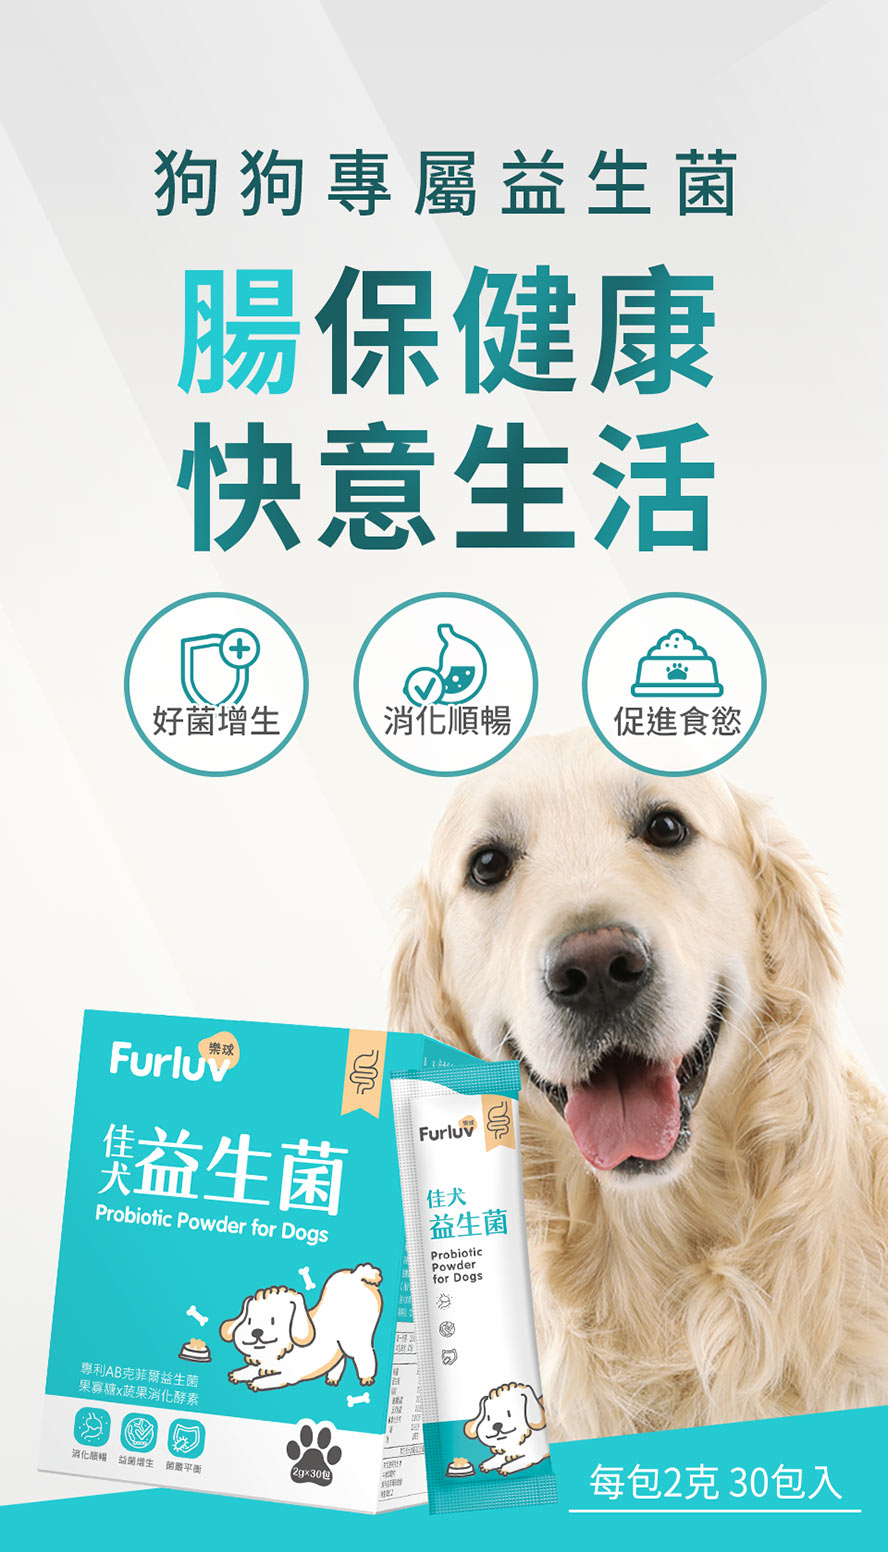 Furluv樂球佳犬益生菌，專為狗狗量身打造的腸胃益生菌，幫助增生好菌、消化順暢、促進食慾